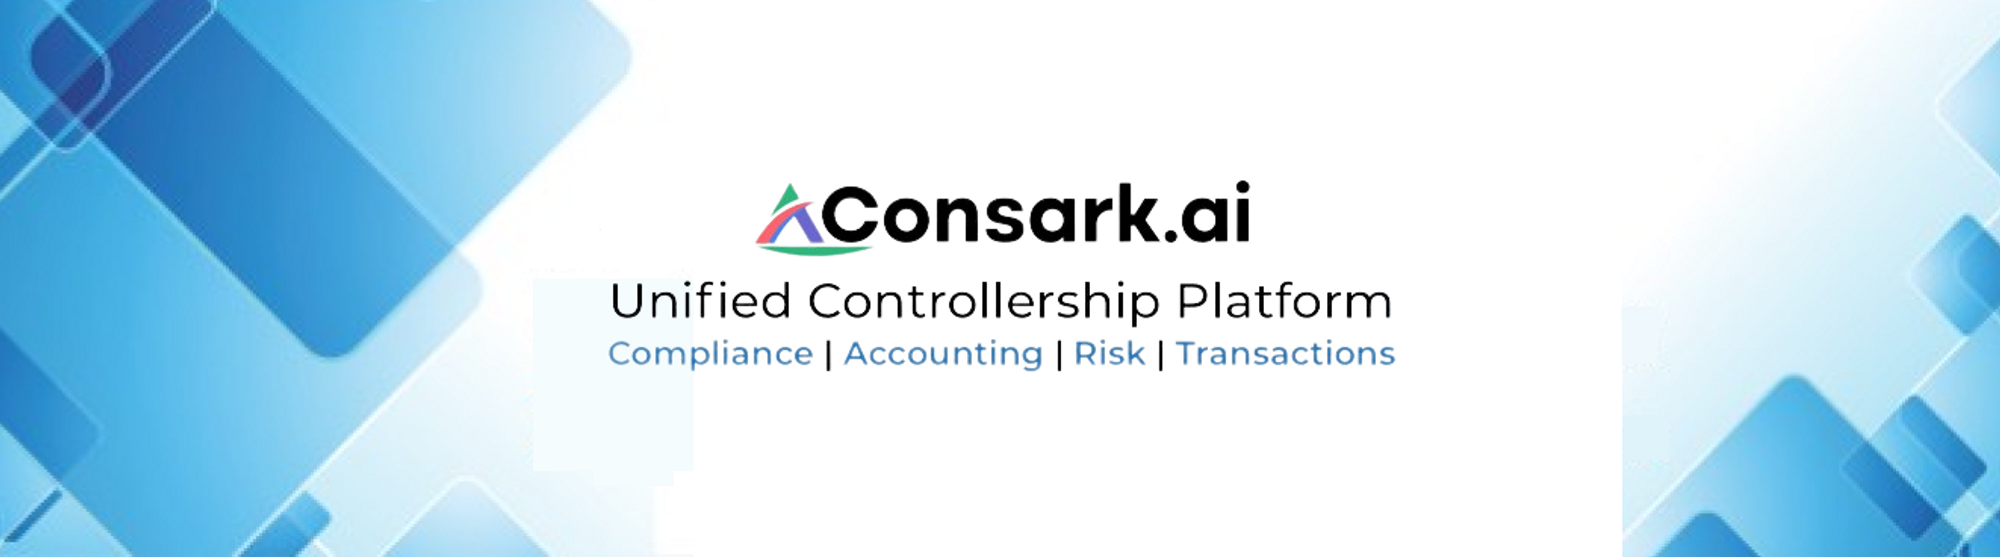 Consark.ai Cover Image